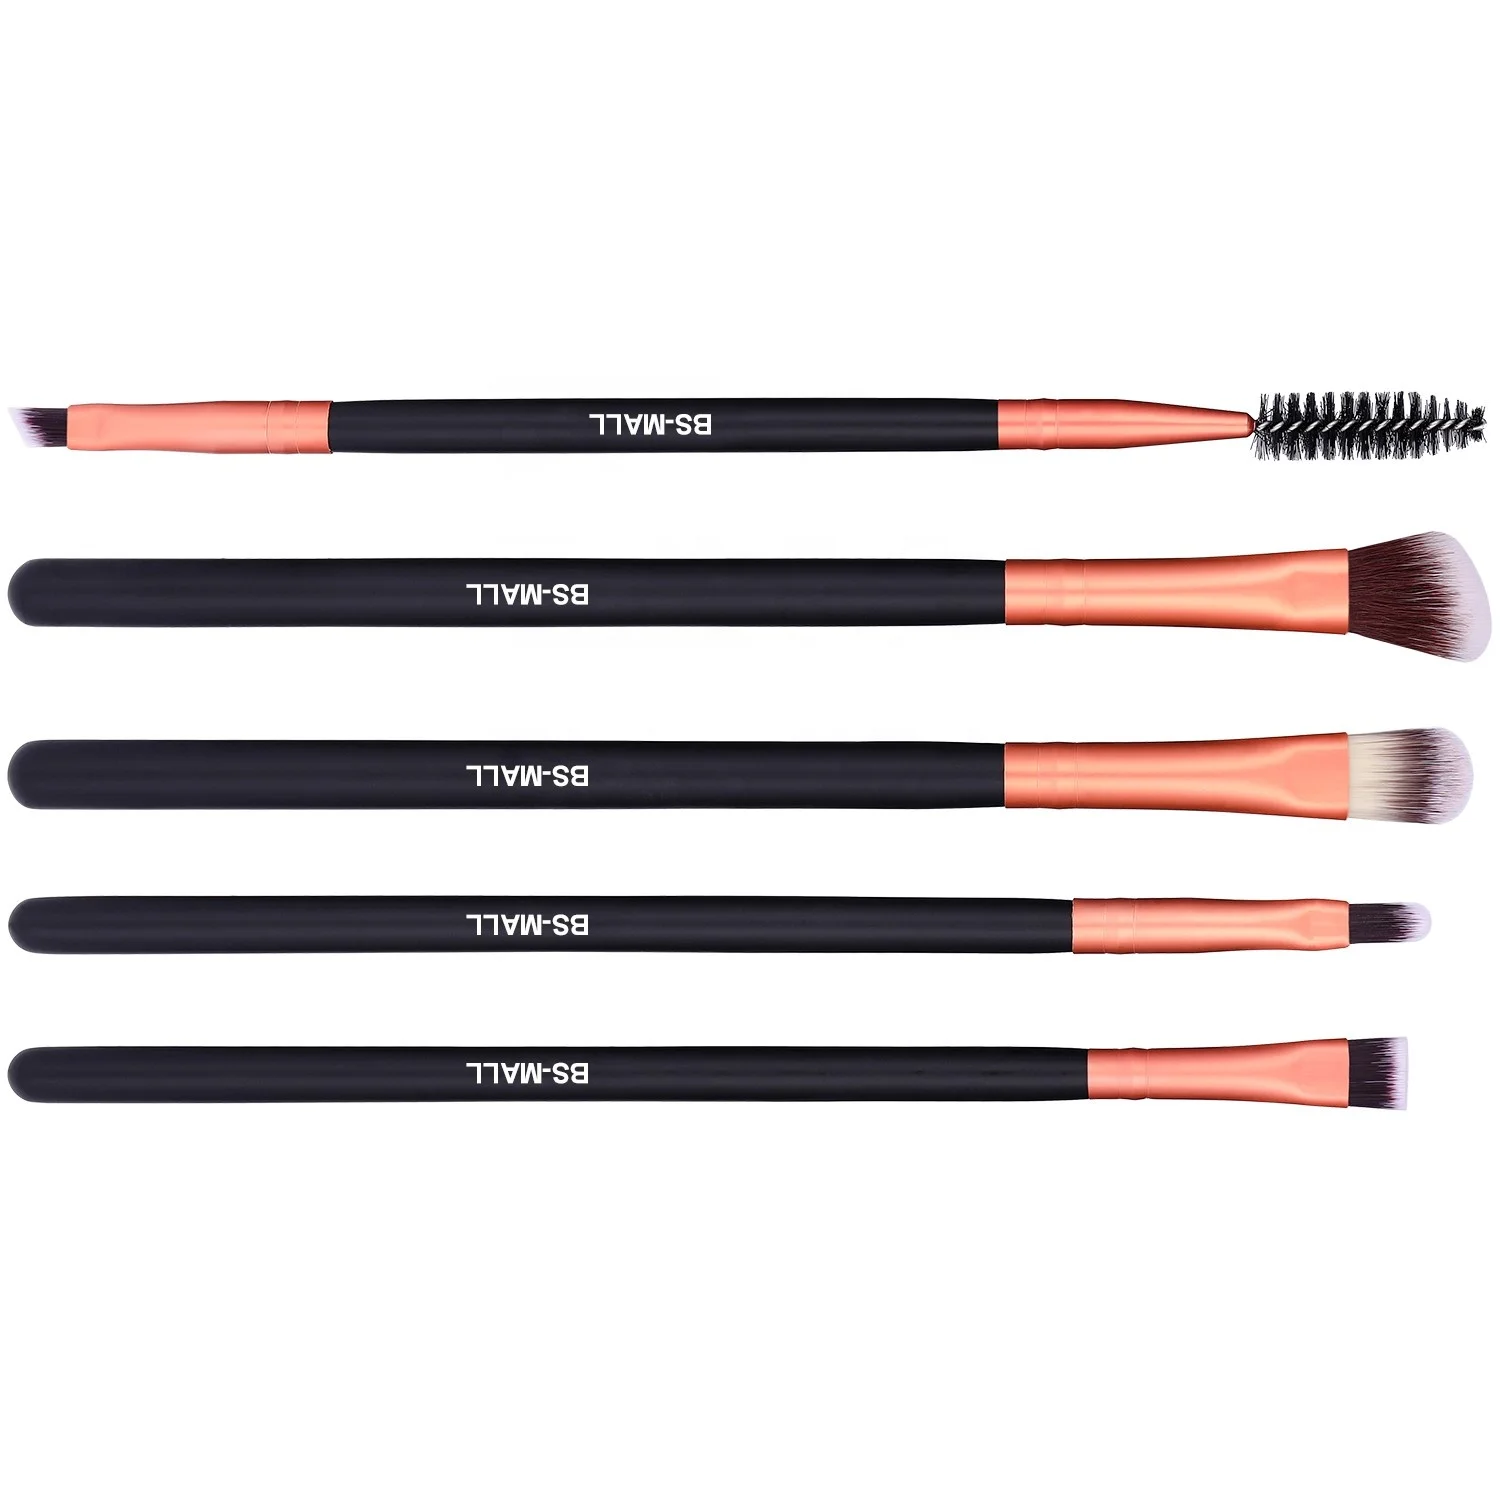 

5 Different Eyeshadow Eyebrow Eyelash Eyeliner Brush Applicator Makeup Cosmetic Brushes Beauty Tool Kits